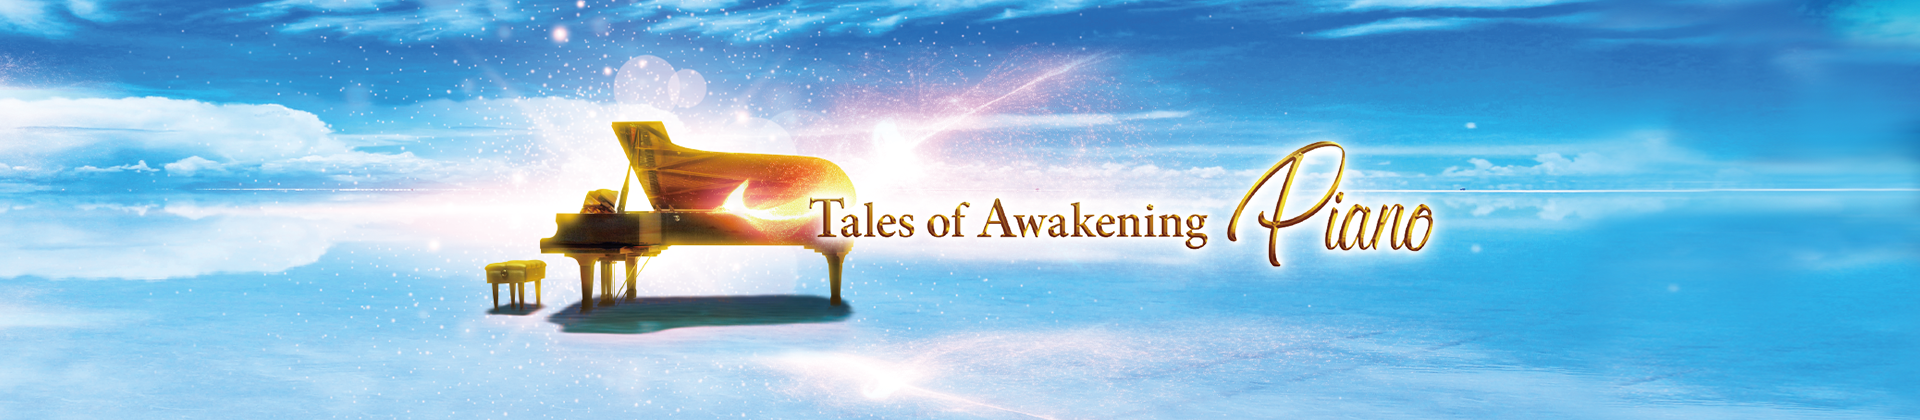 Tales of Awakening Piano